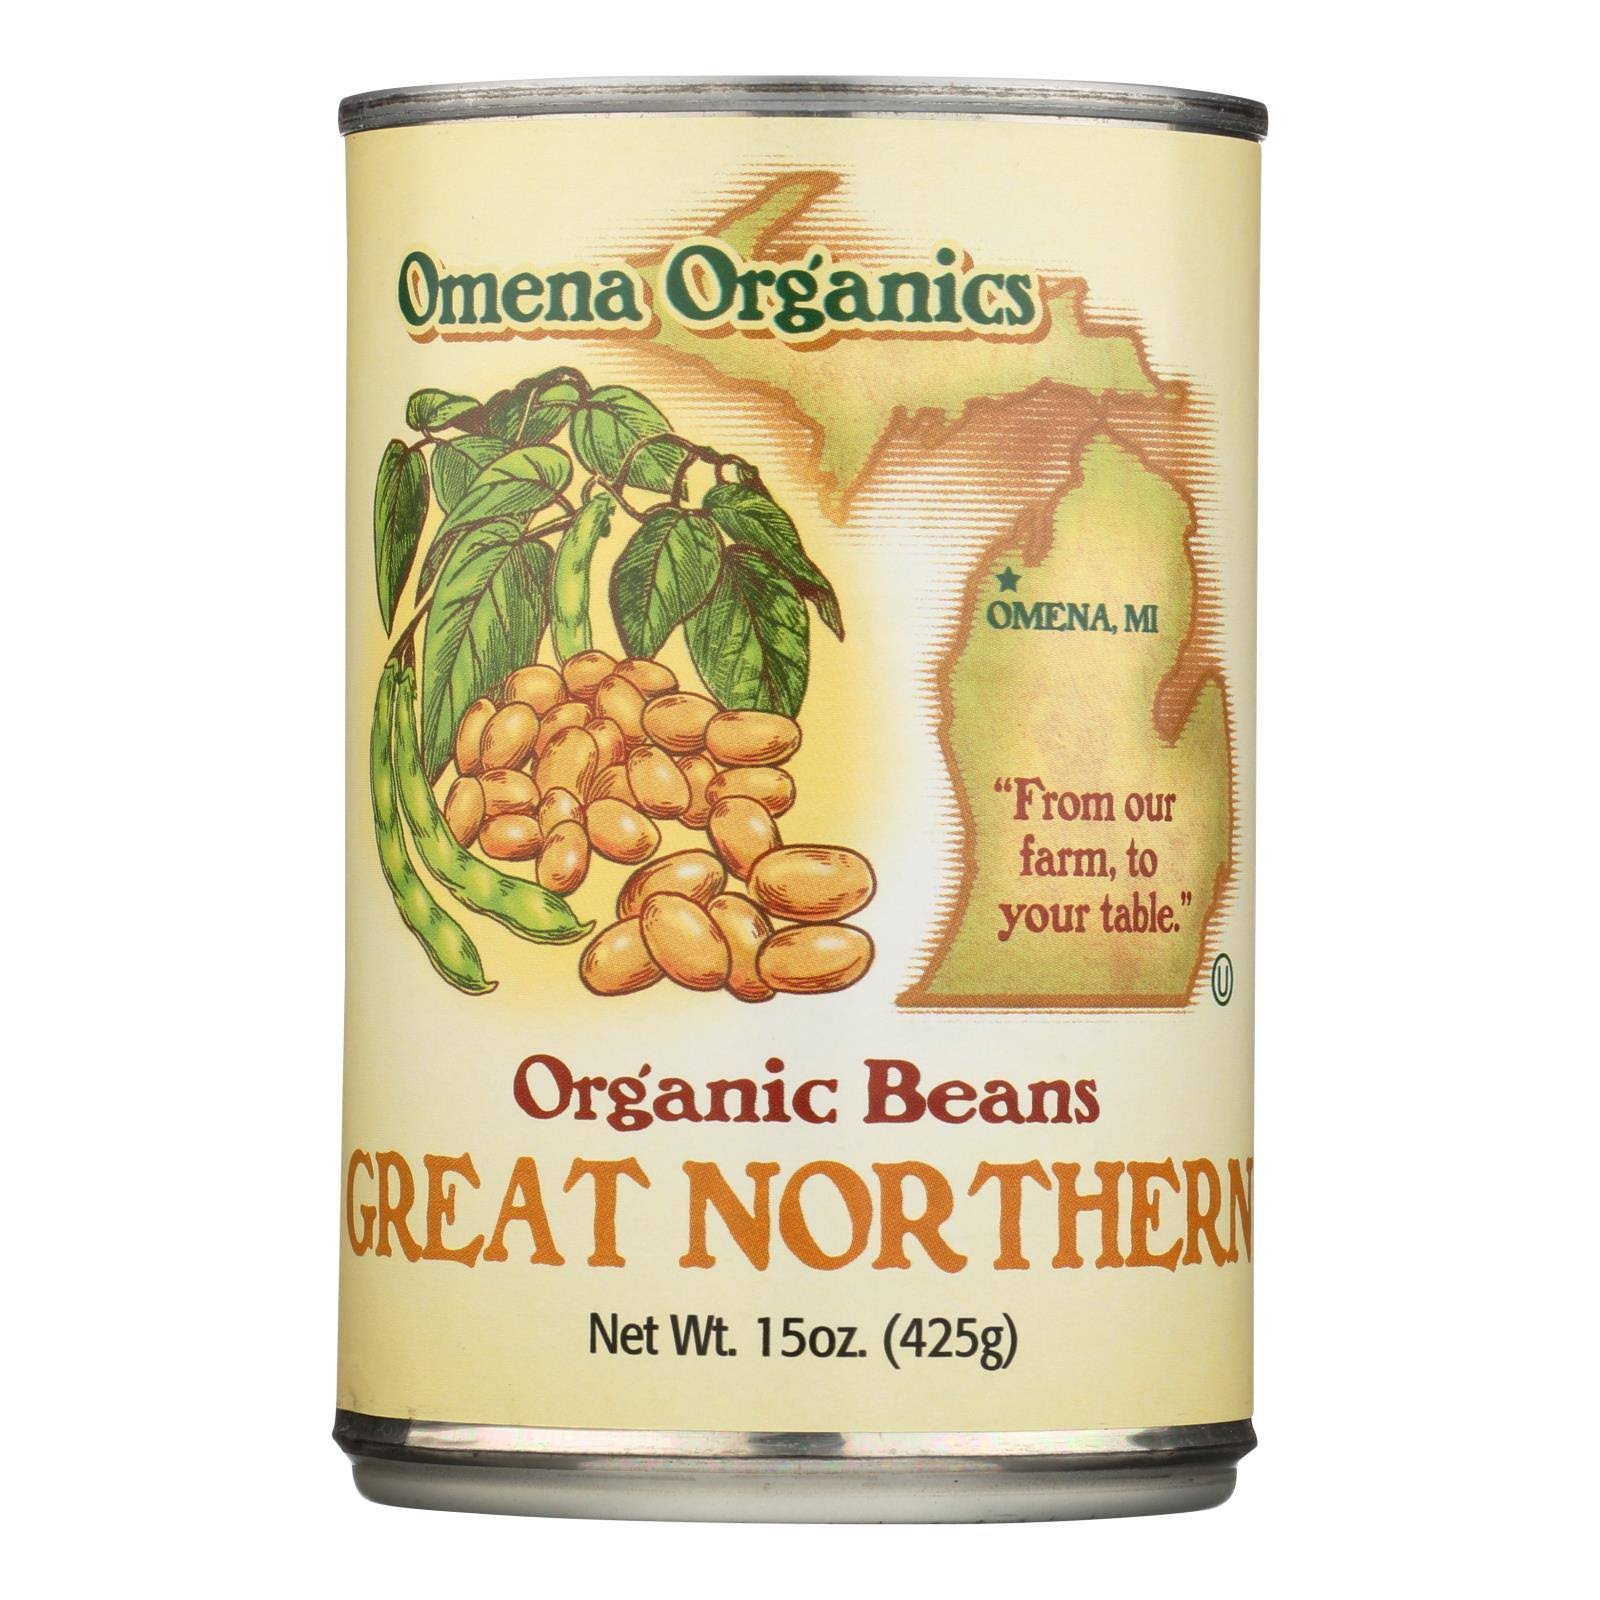 Omena Organics Great Northern Organic Beans - 15 oz